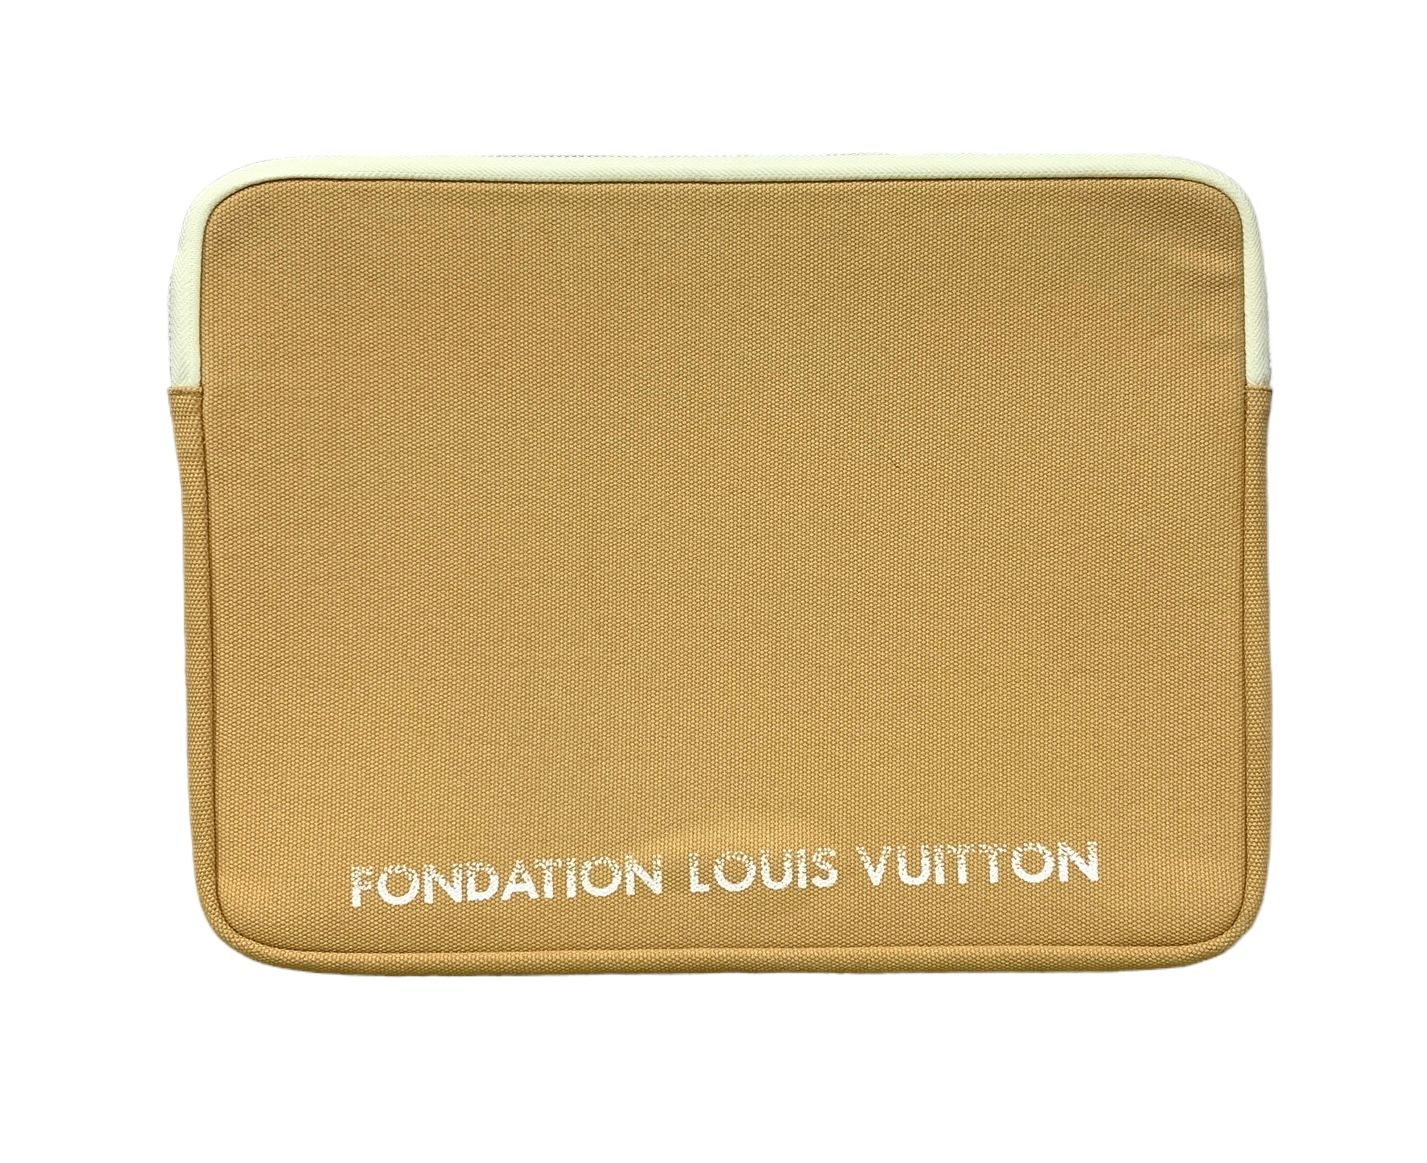 Fondation Louis Vuitton (フォンダシオンルイヴィトン) 美術館